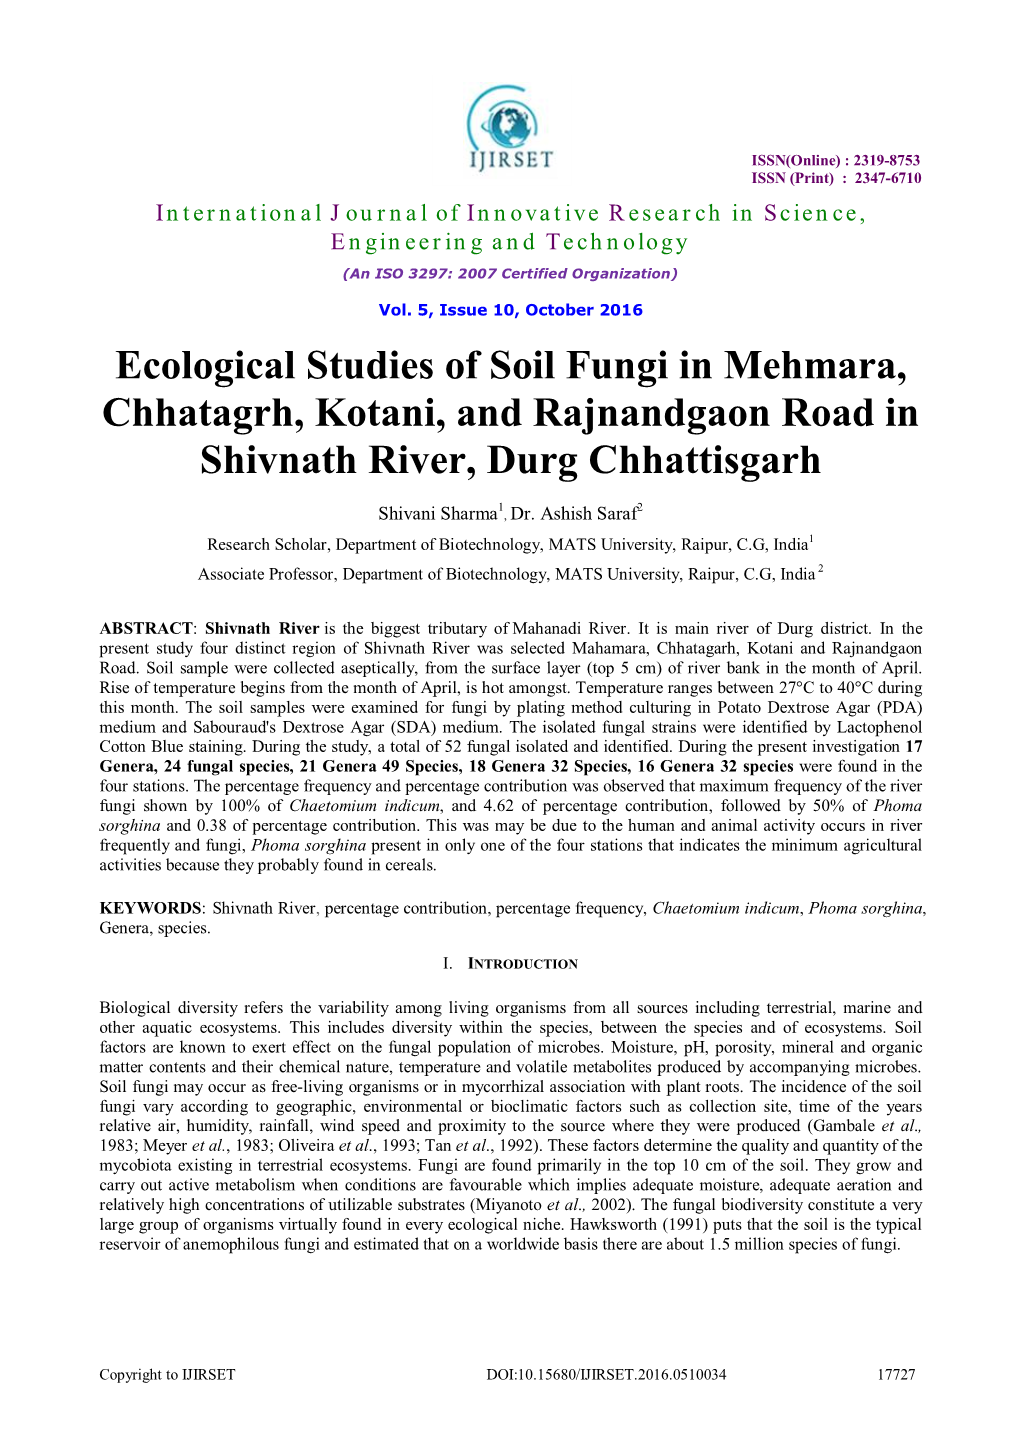 Ecological Studies of Soil Fungi in Mehmara, Chhatagrh, Kotani, and Rajnandgaon Road in Shivnath River, Durg Chhattisgarh